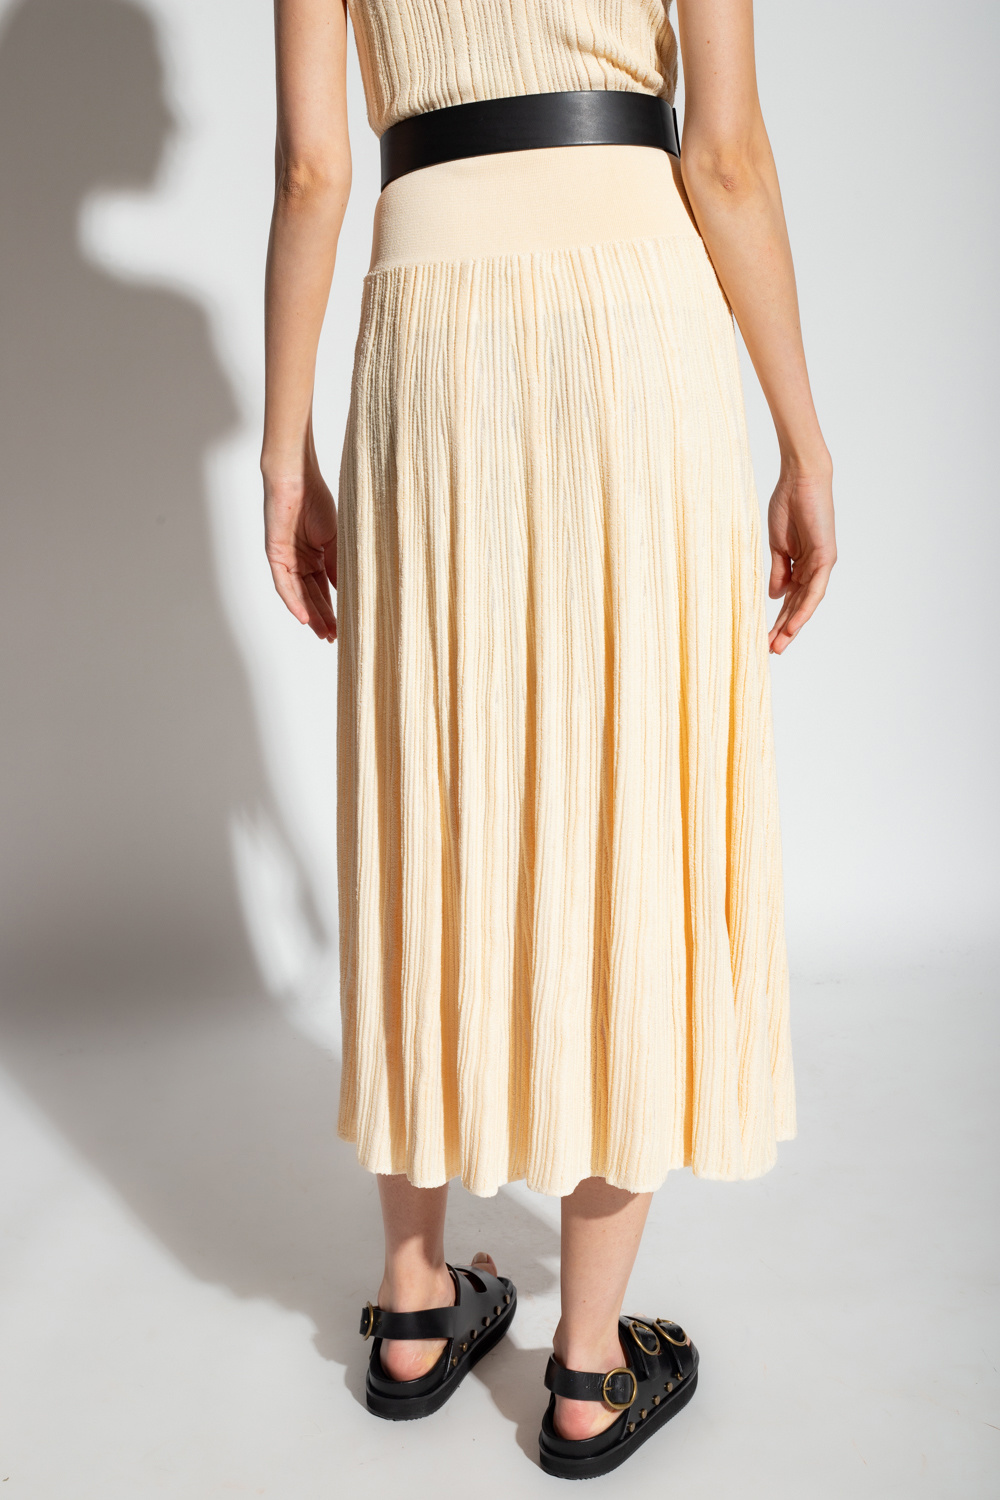 StclaircomoShops | Ulla Johnson 'Kiera' skirt | Women's Clothing